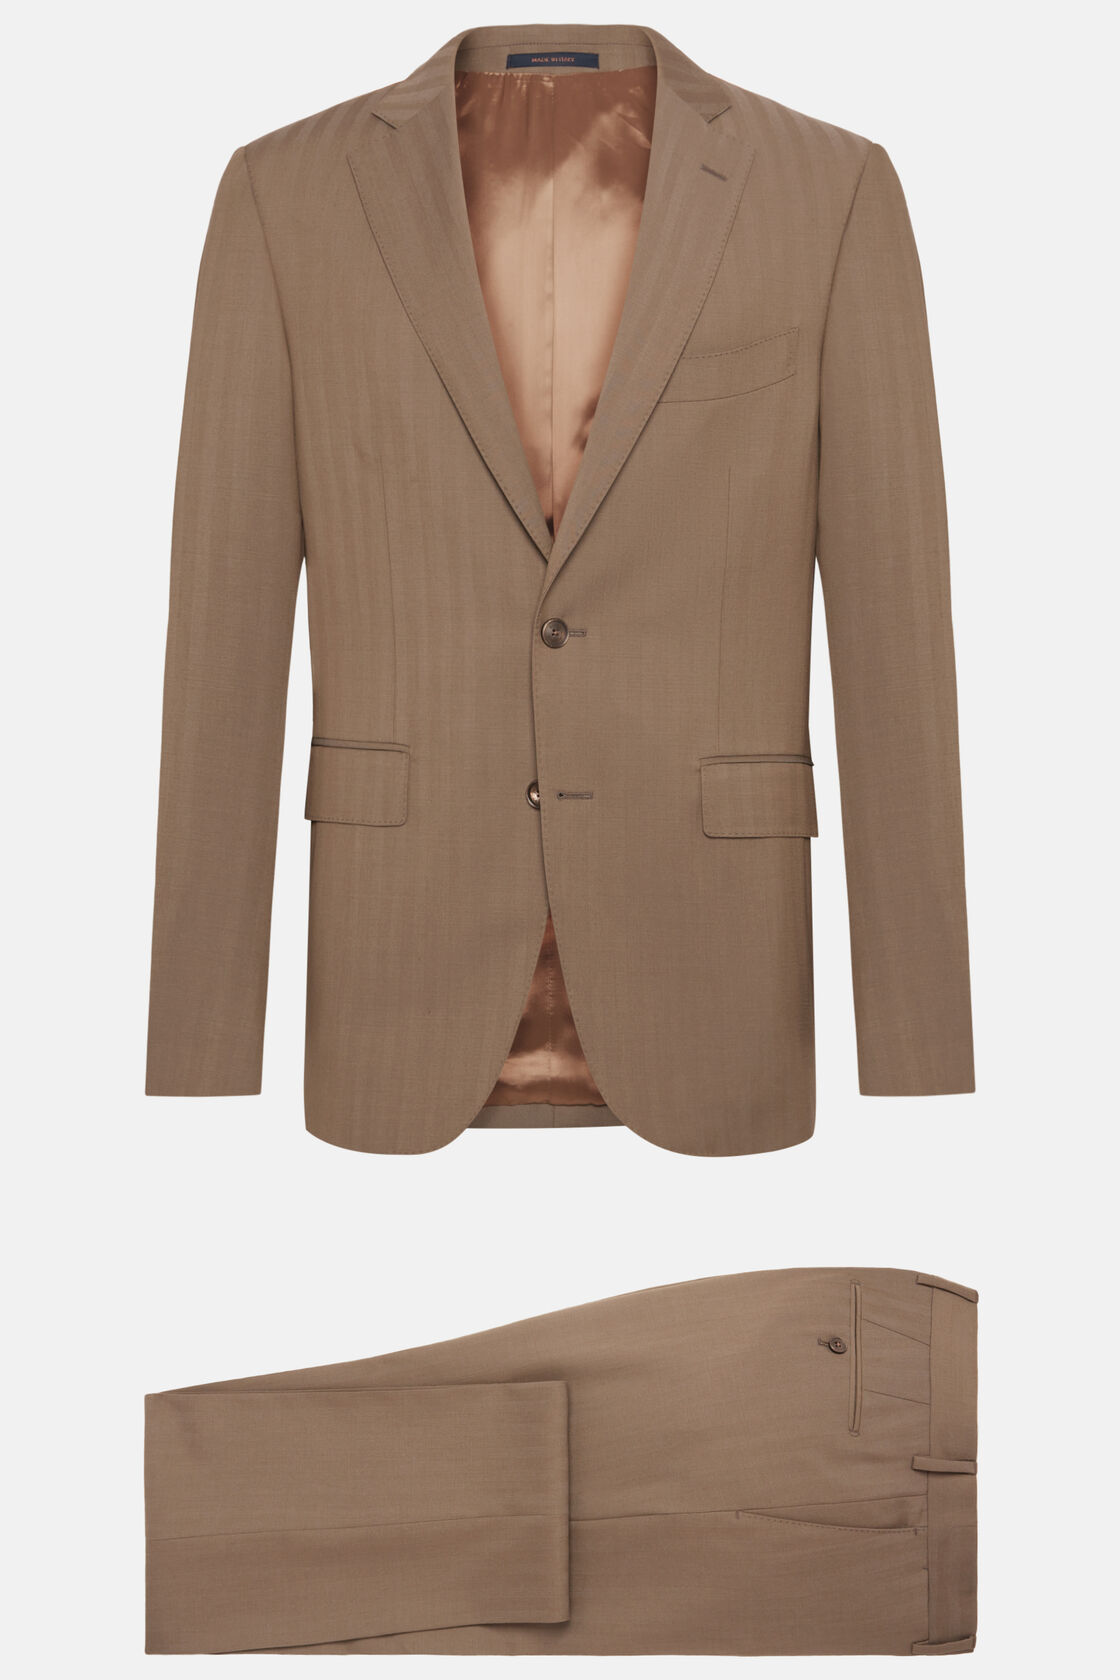 Dove Grey Herringbone Suit In Super 130 Pure Wool, Taupe, hi-res